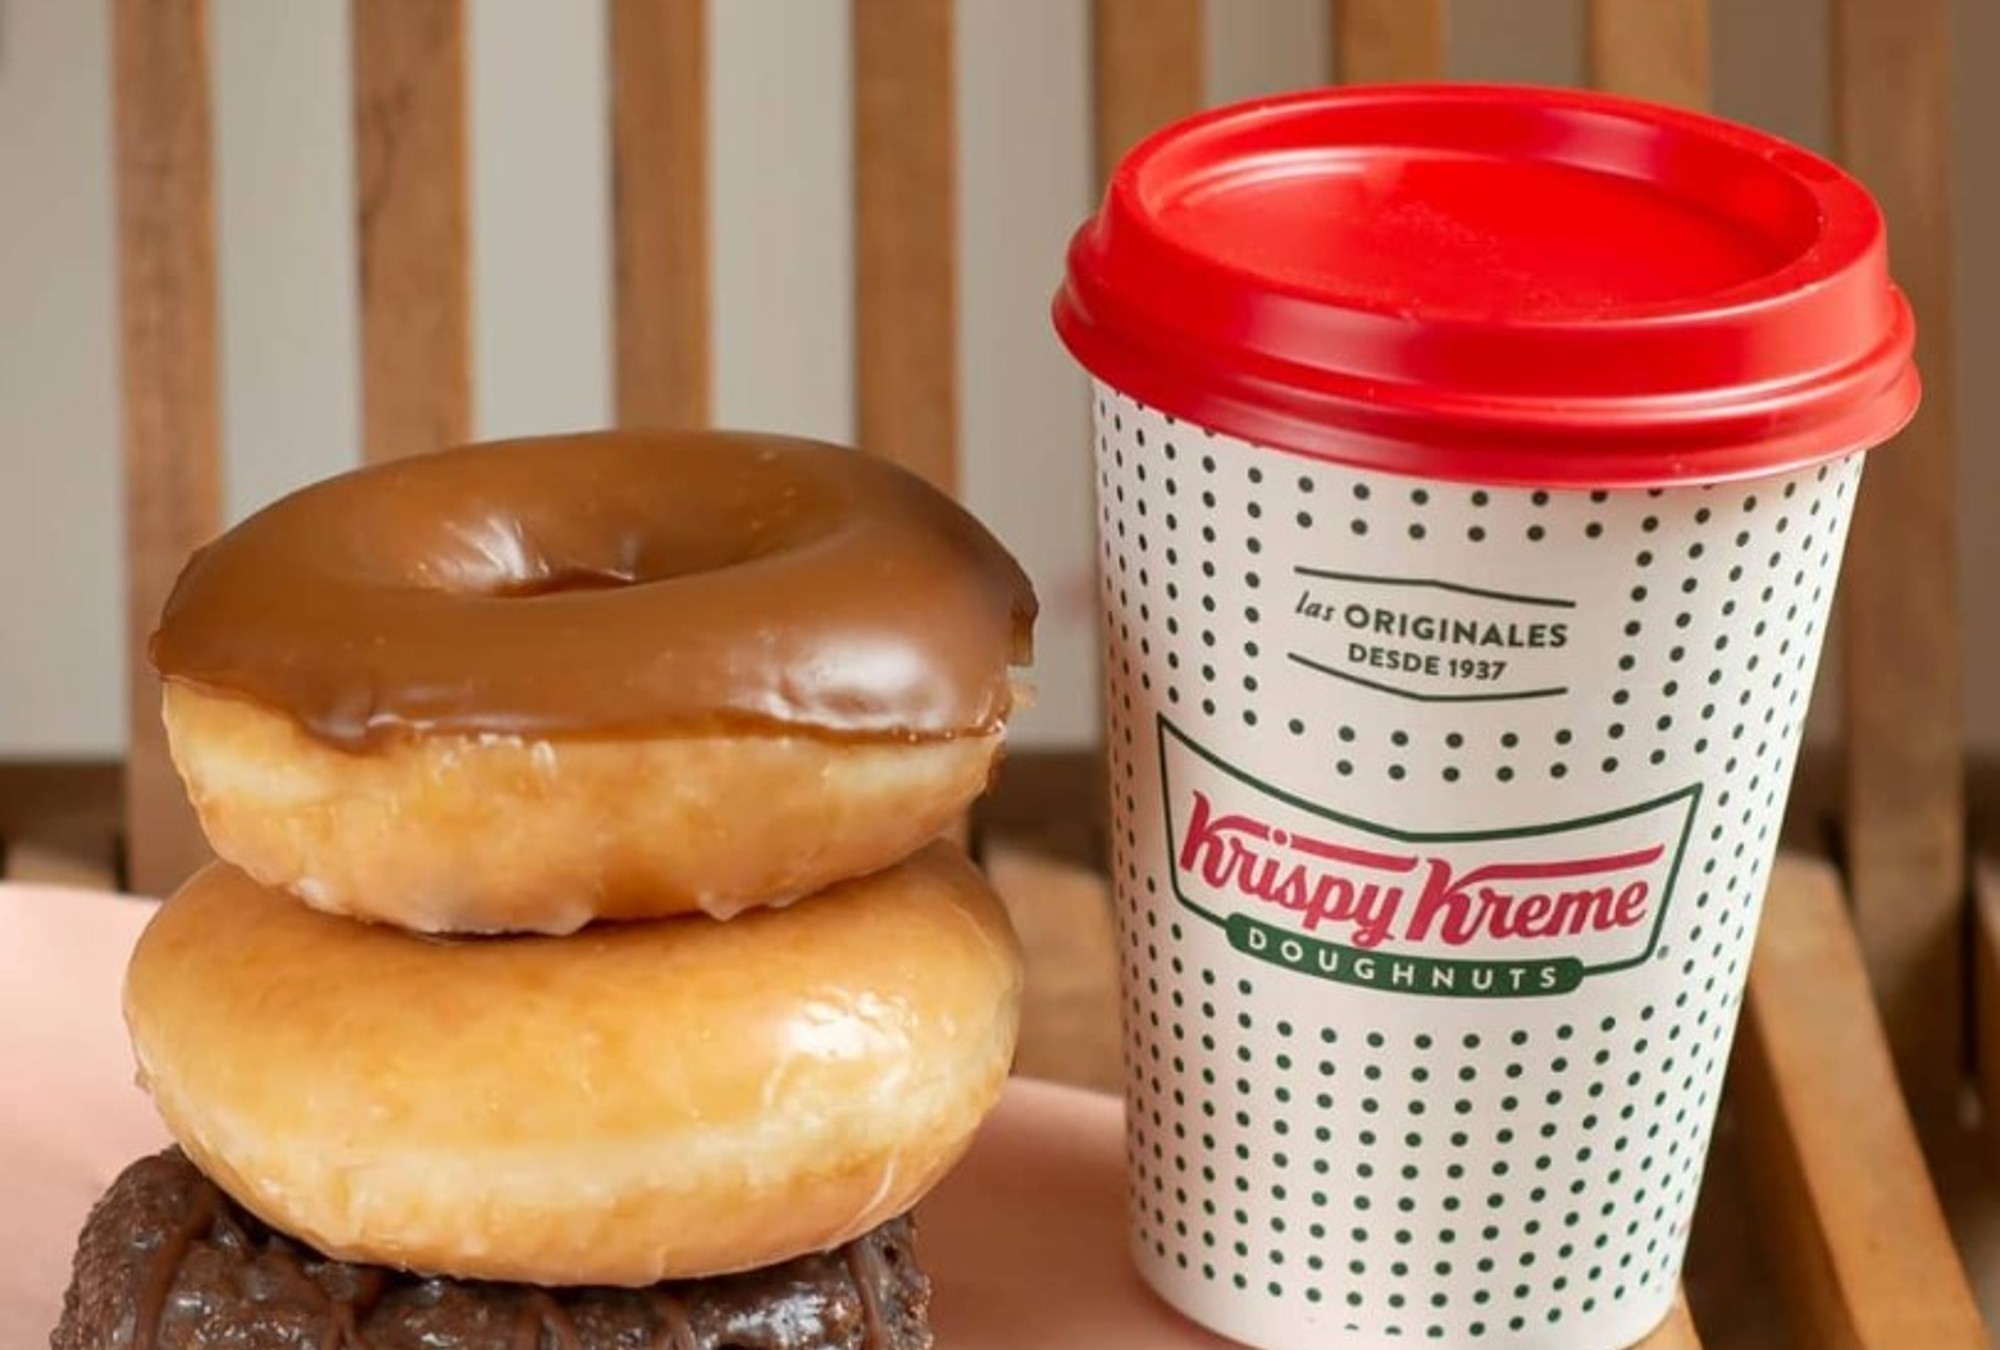 ¿Cuál es el origen de la franquicia de Krispy Kreme?